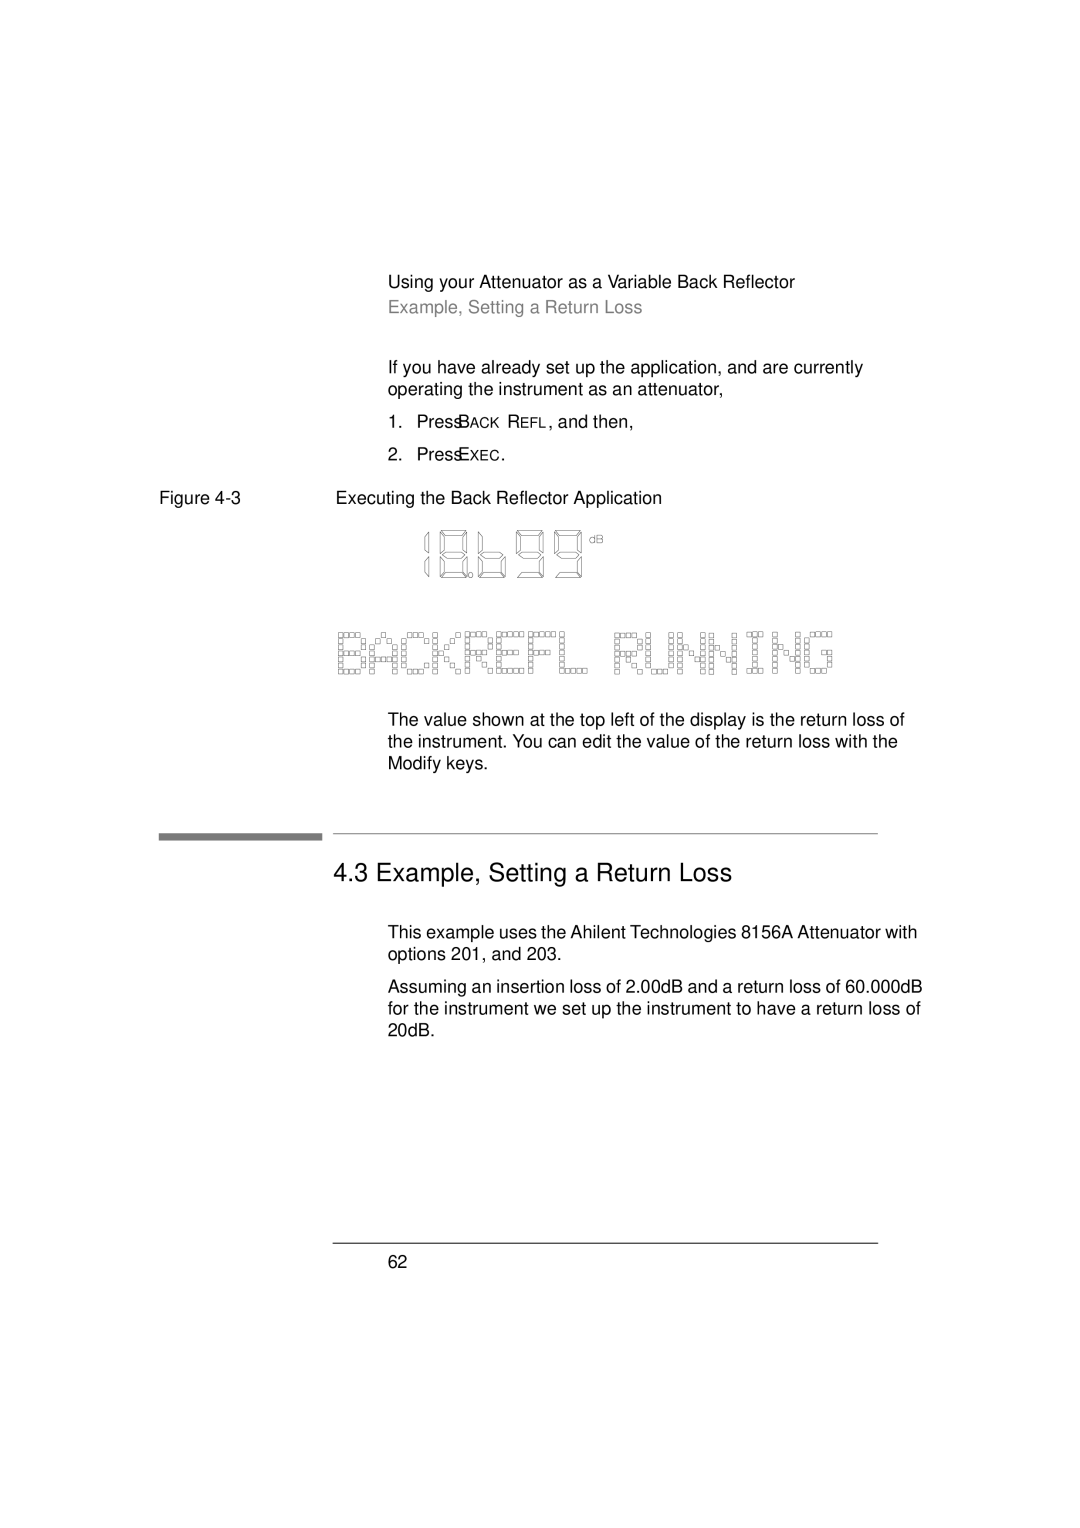 Agilent Technologies 8156A manual Example, Setting a Return Loss 